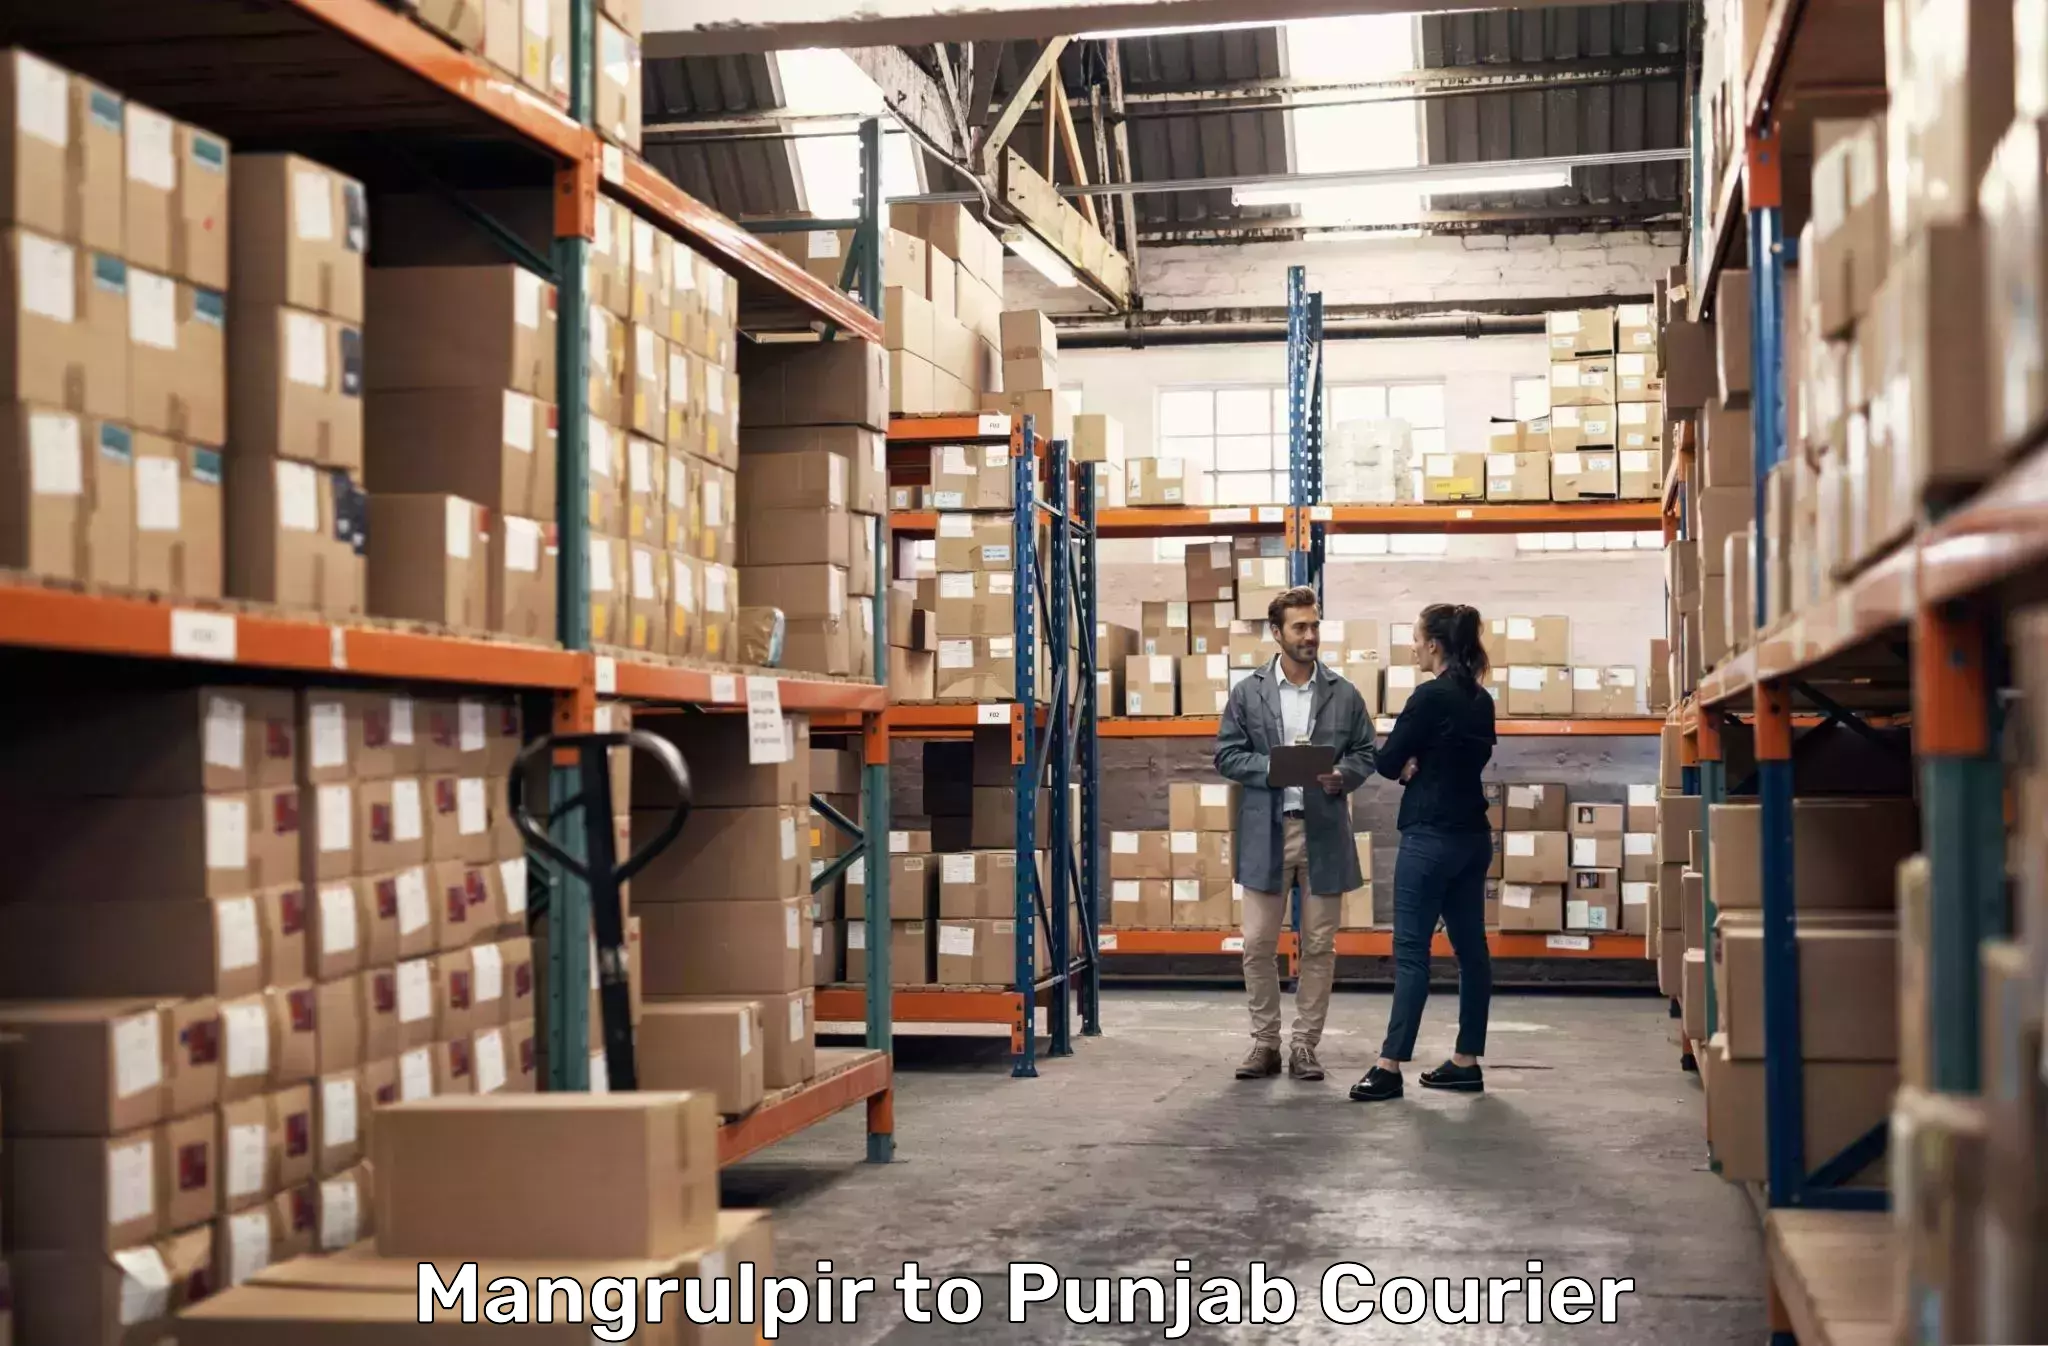 Courier service comparison in Mangrulpir to Malerkotla